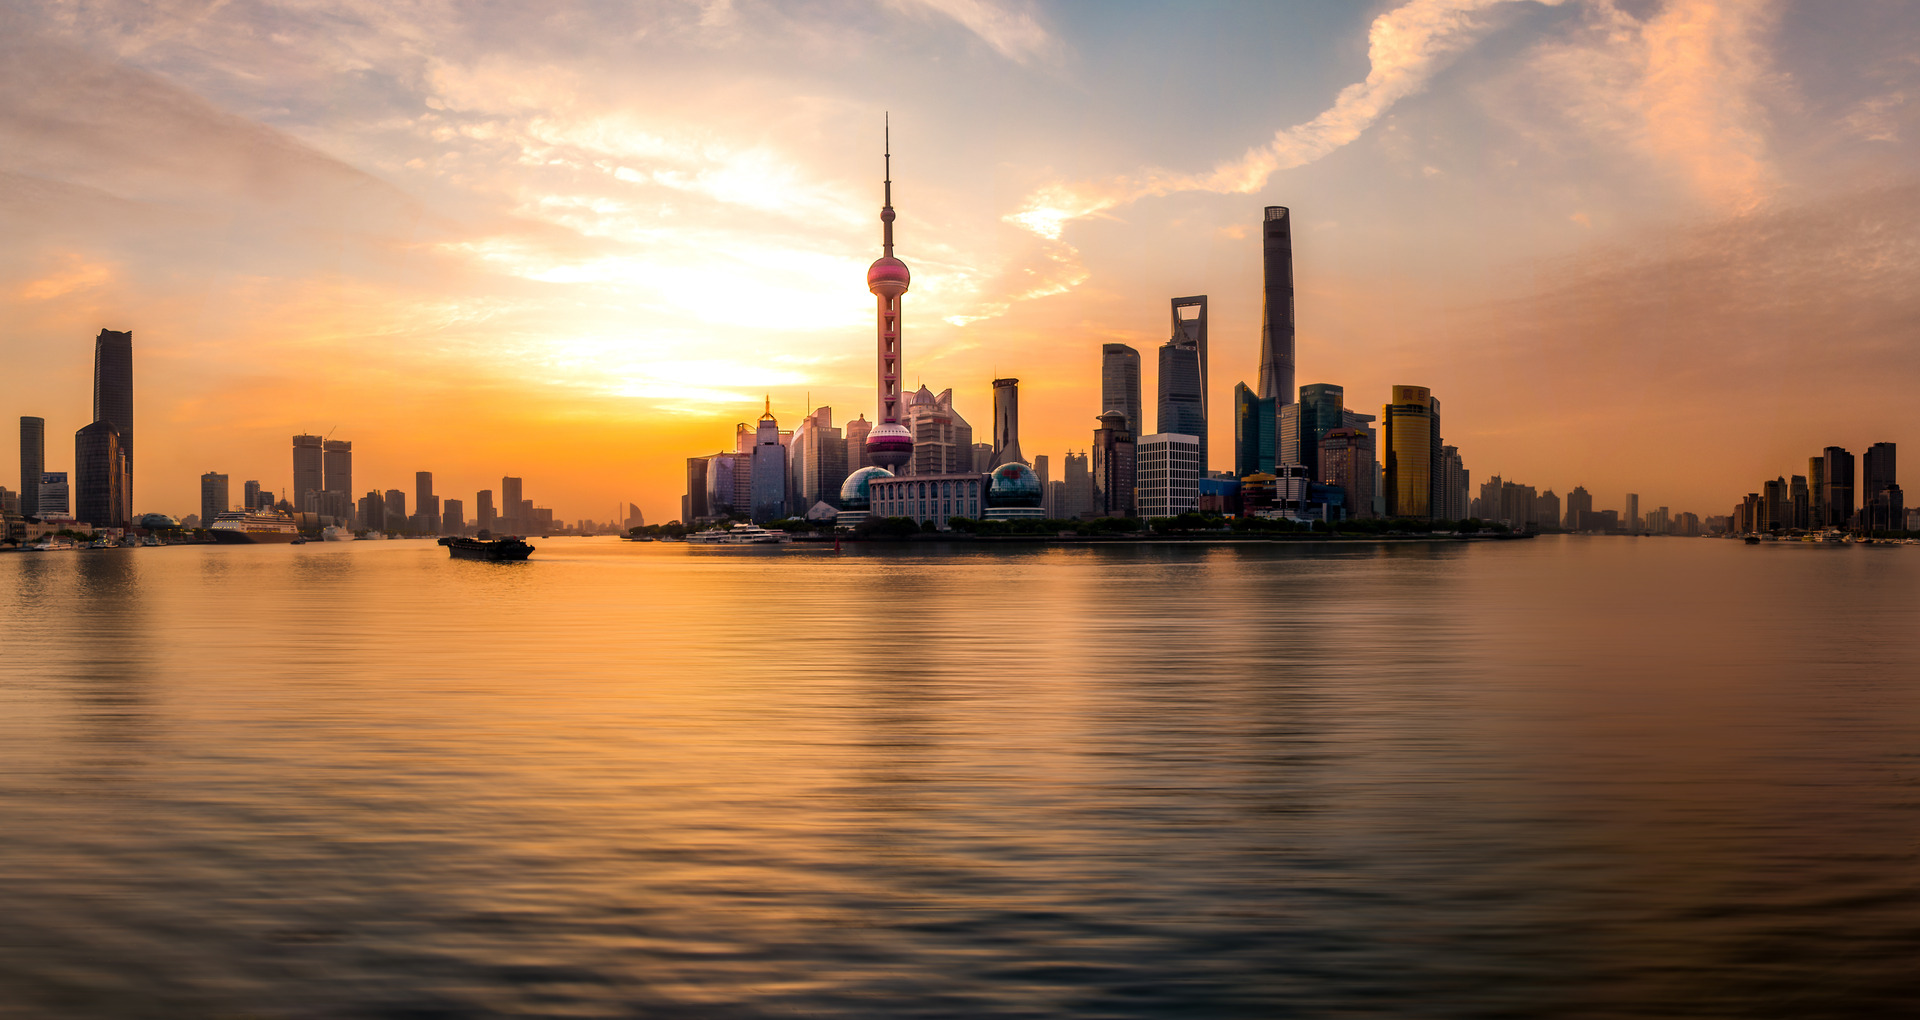 The panoramic sunrise over the Shanghai 